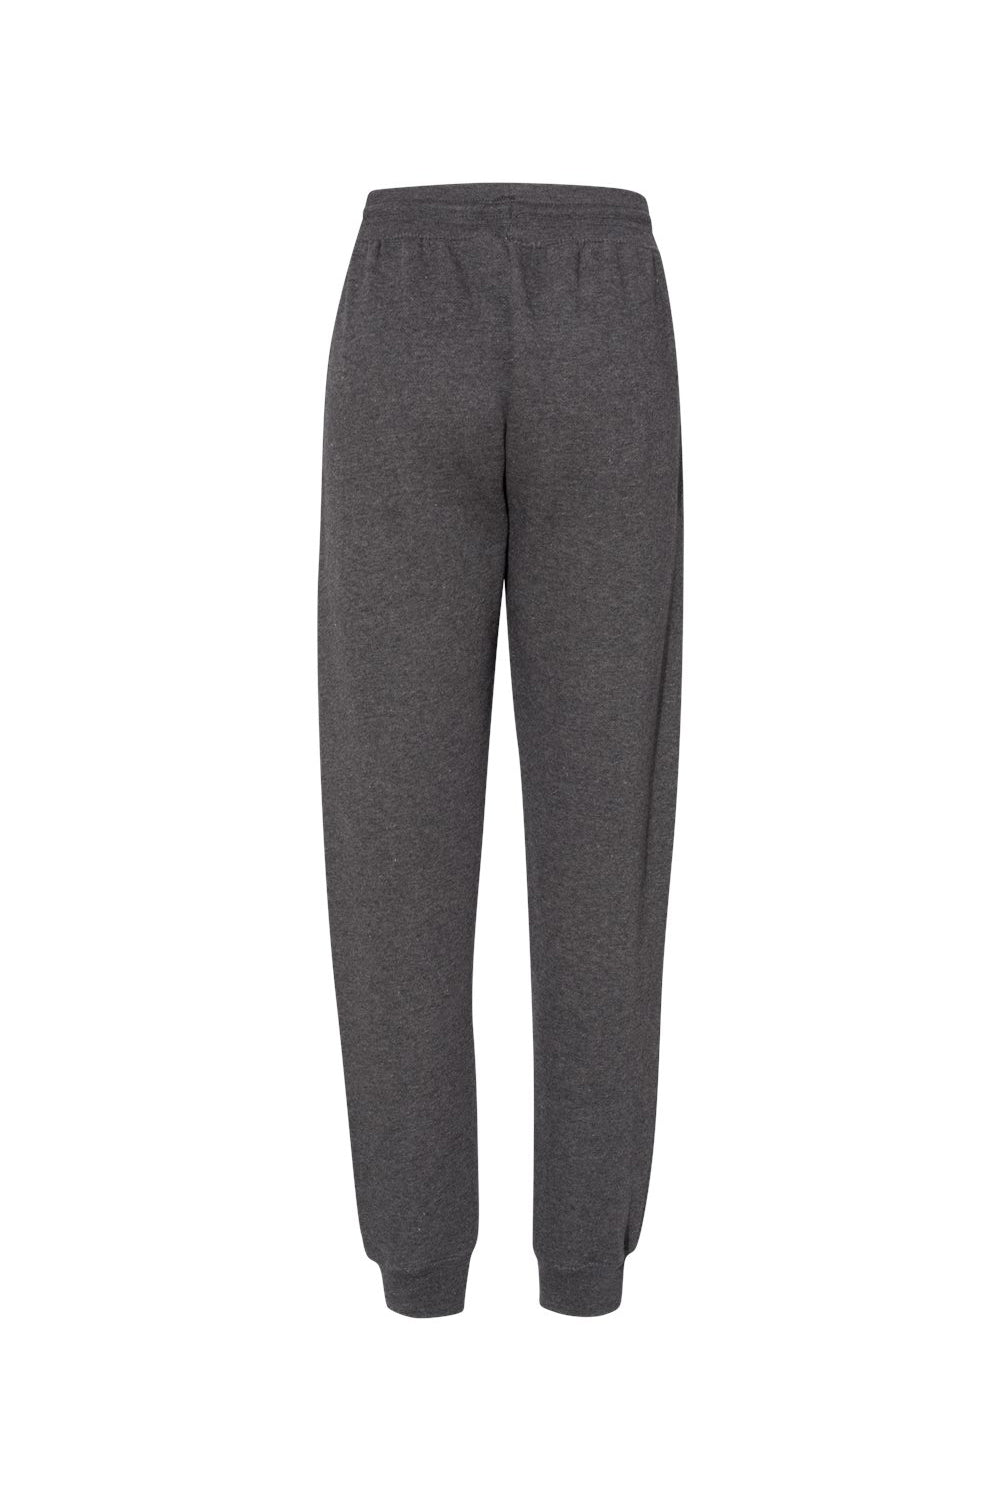 Badger 1216 Womens Athletic Fleece Jogger Sweatpants w/ Pockets Charcoal Grey Flat Back